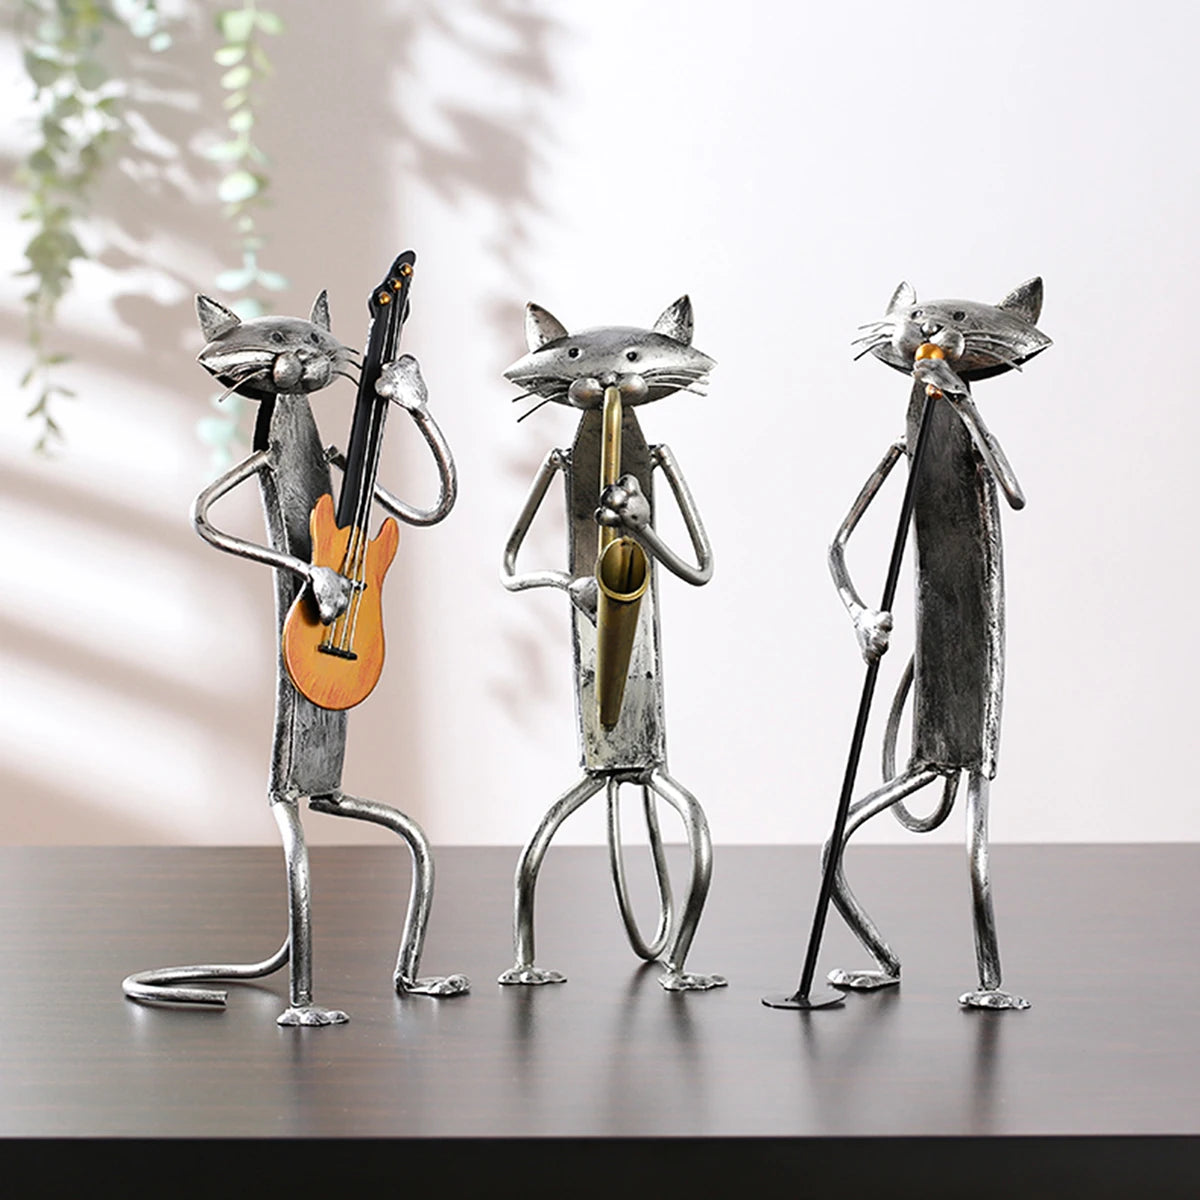 TOOARTS Metal Sculpture A Playing Guitar Cat Home Furnishing Articles Handicrafts Art Sculpture Office Figurines Decoration